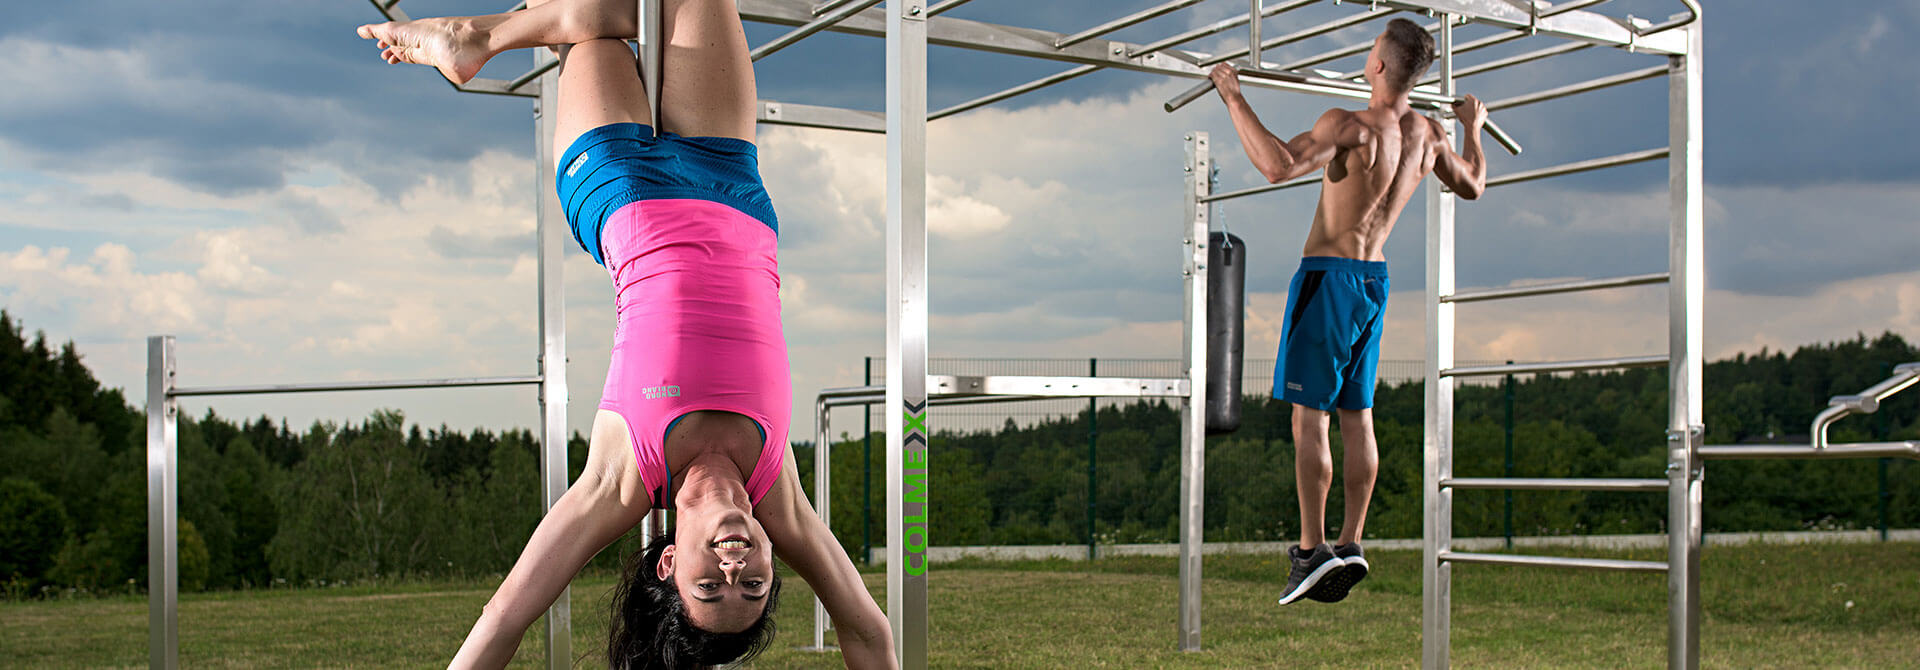 Calisthenics Gym Street Workout Fitness Training Exercise | Poster